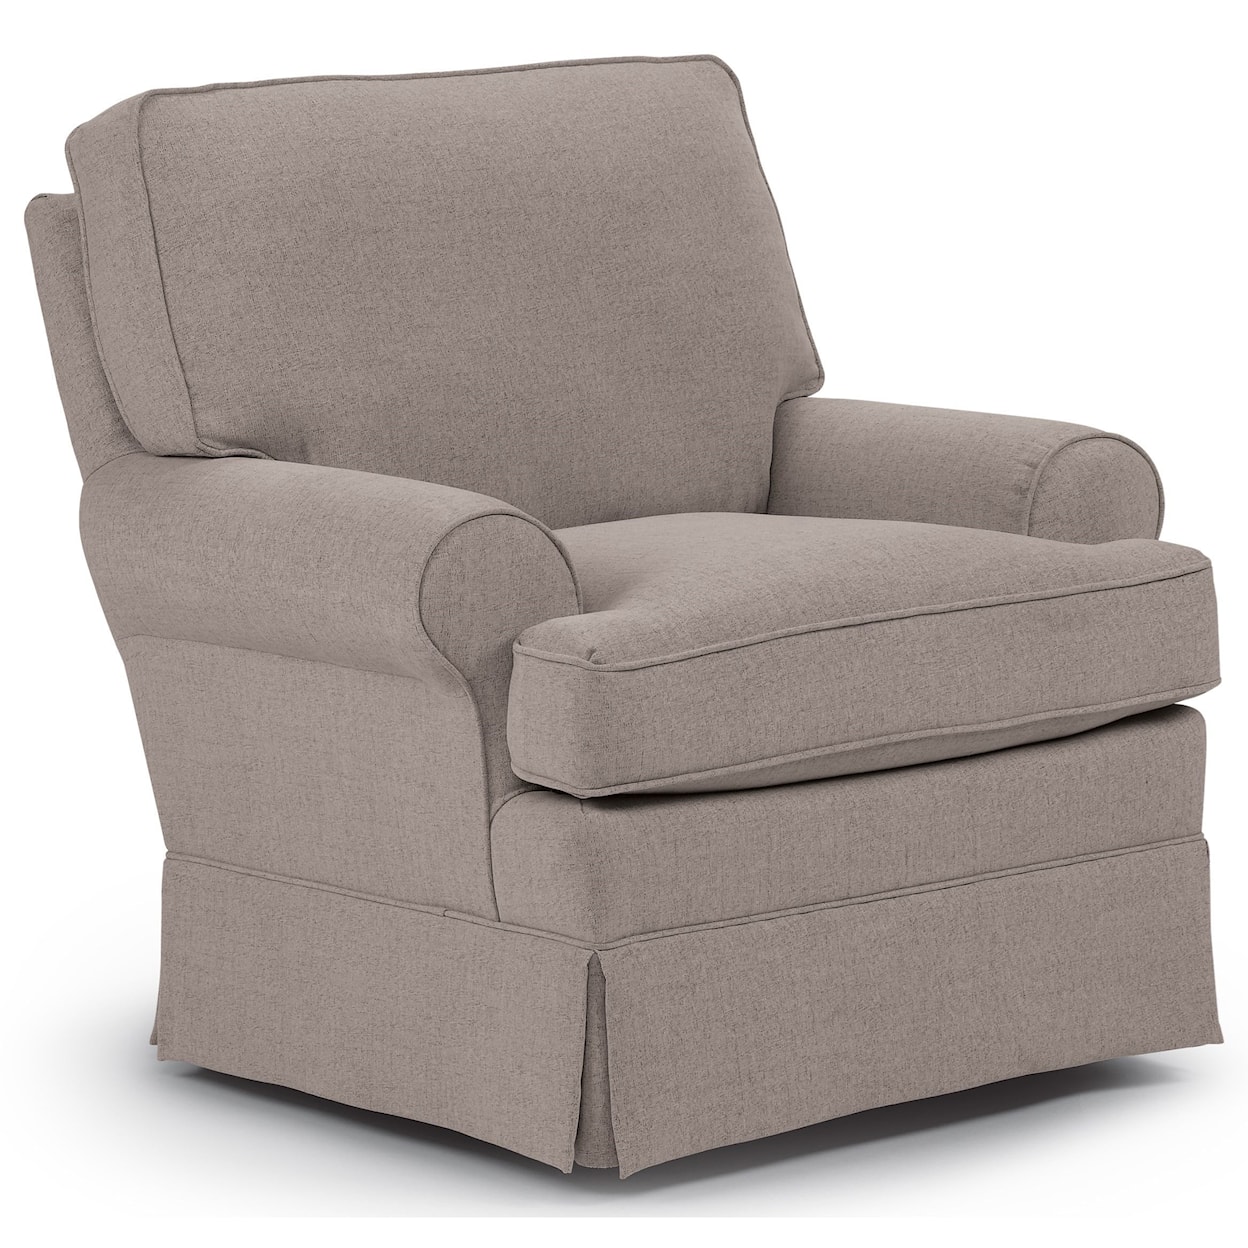 Bravo Furniture Quinn Swivel Glider Chair without Welt Cord Trim